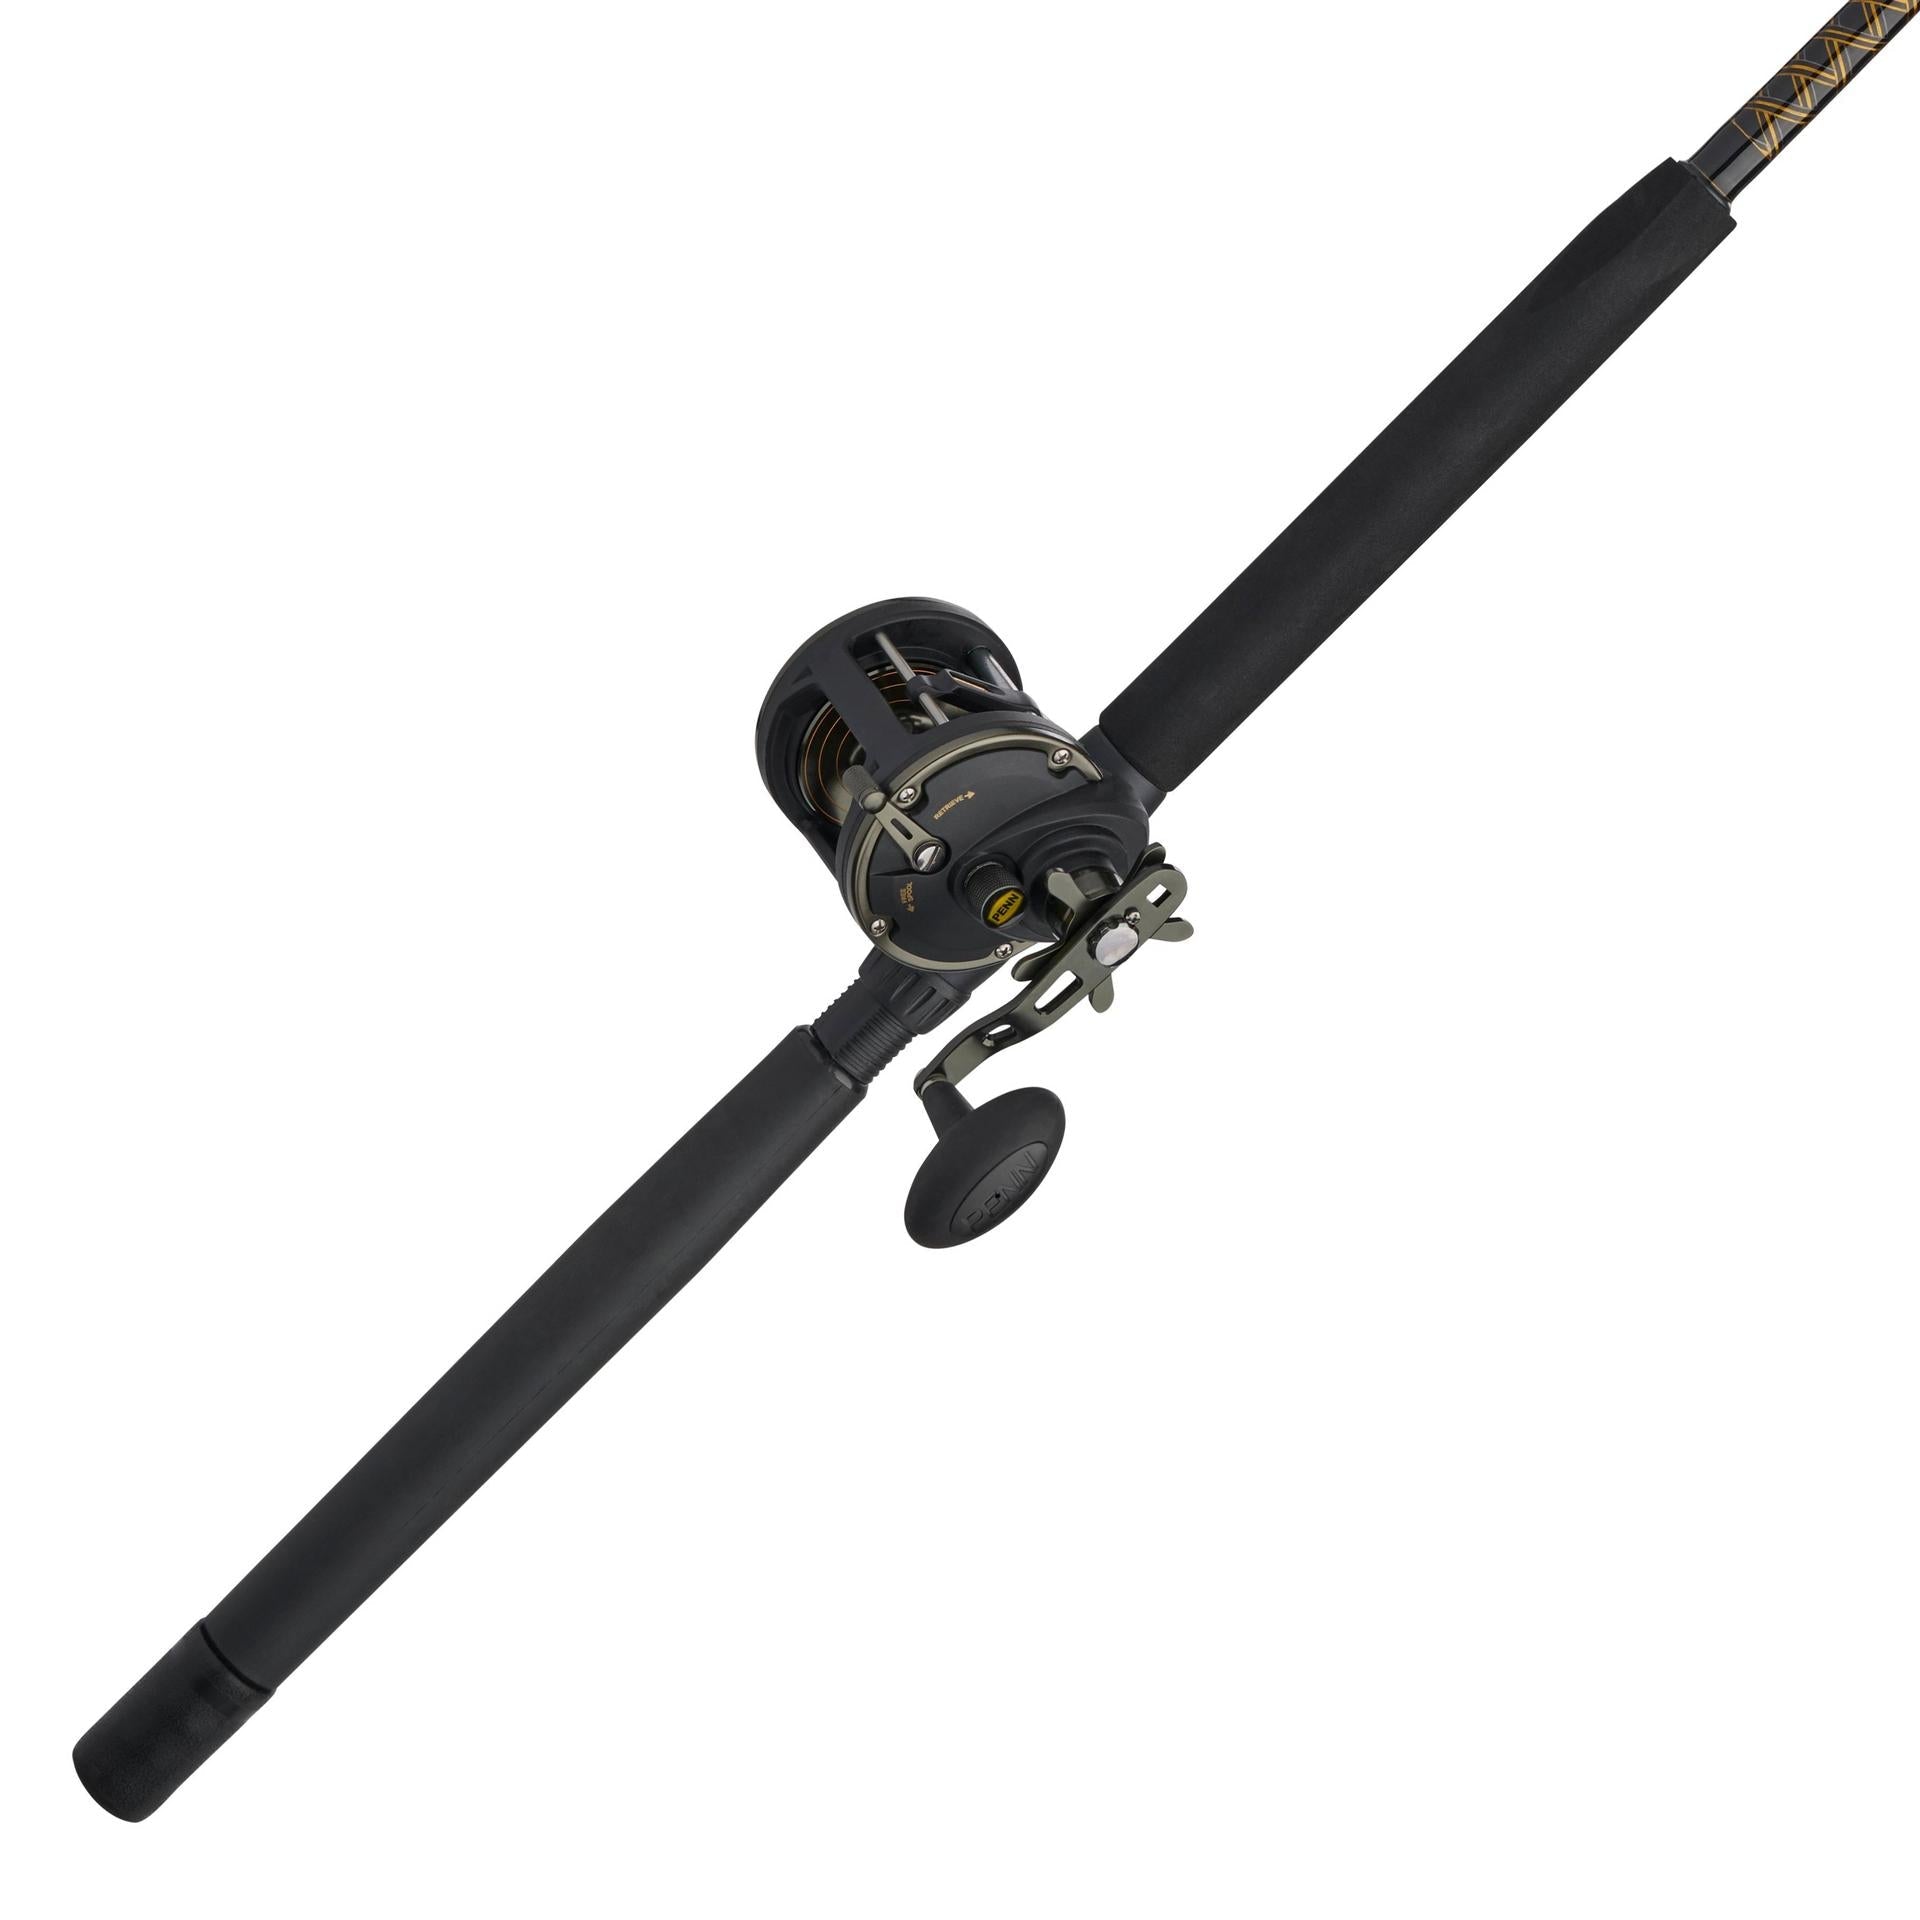 PENN Squall 50 Lever Drag Fishing Reel - Black/Gold 31324203099